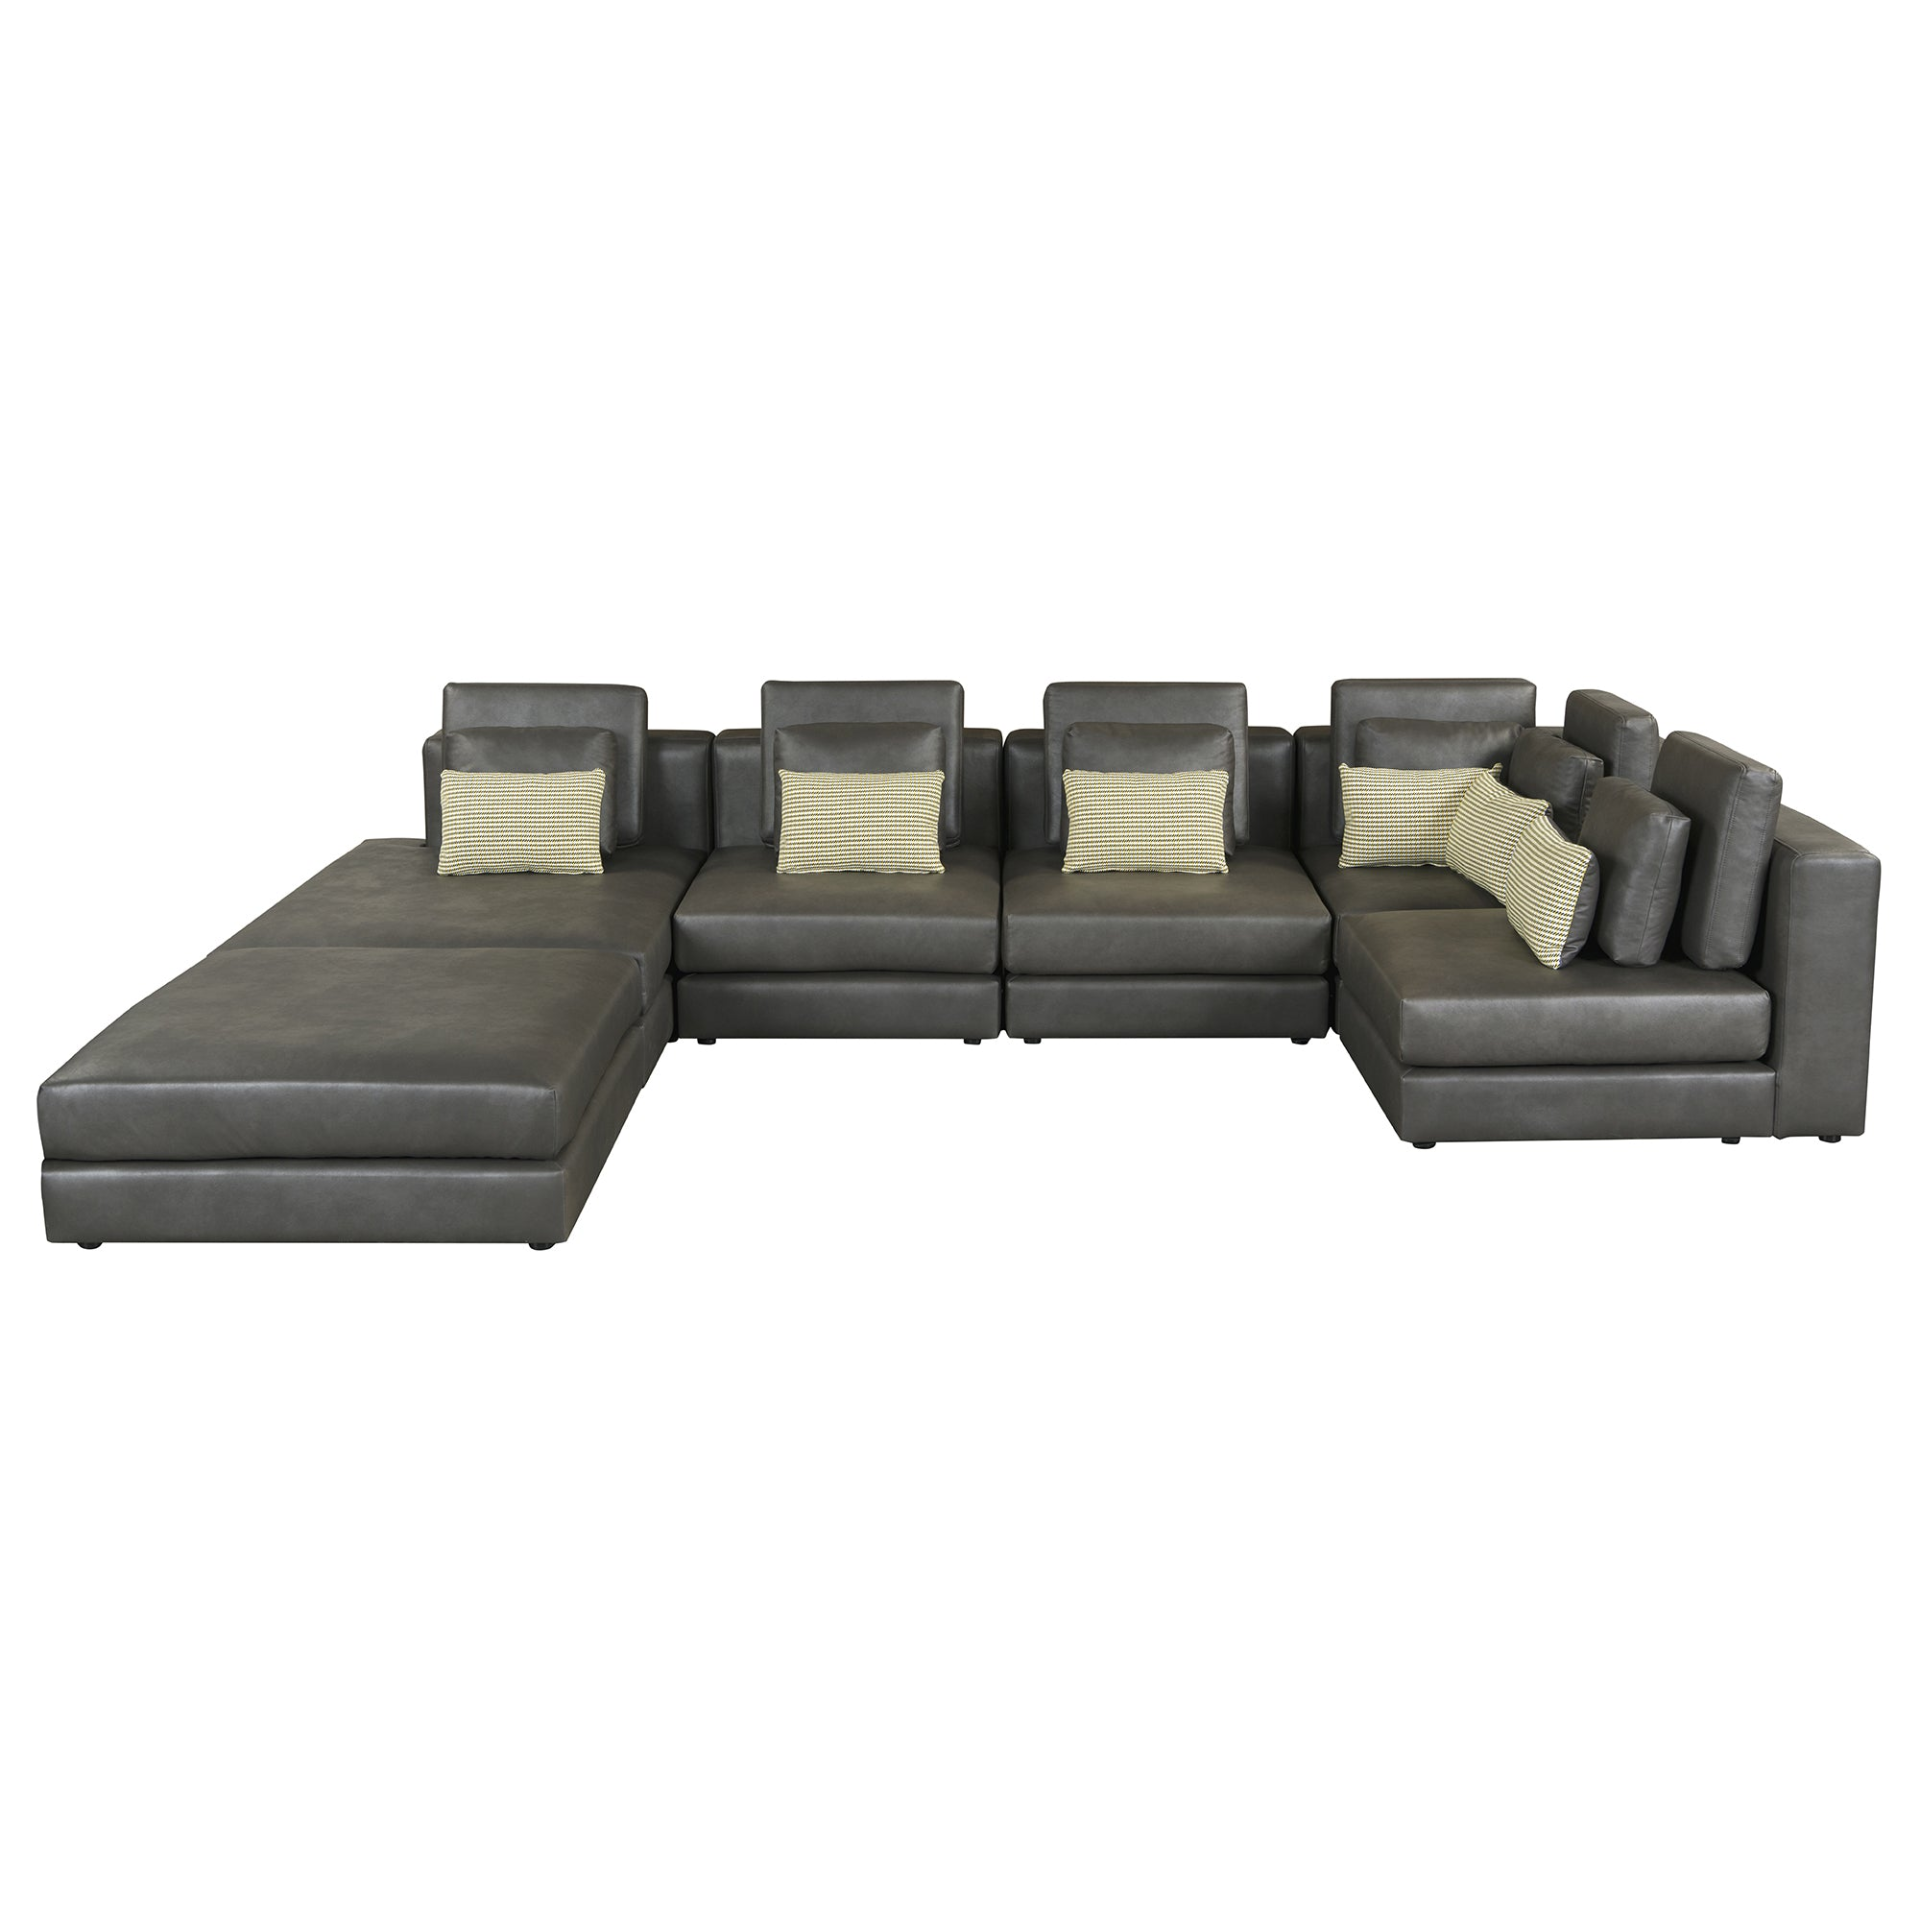 Black - Chic Modular Sectional Sofa With Movable Ottoman (112.7" x 103")